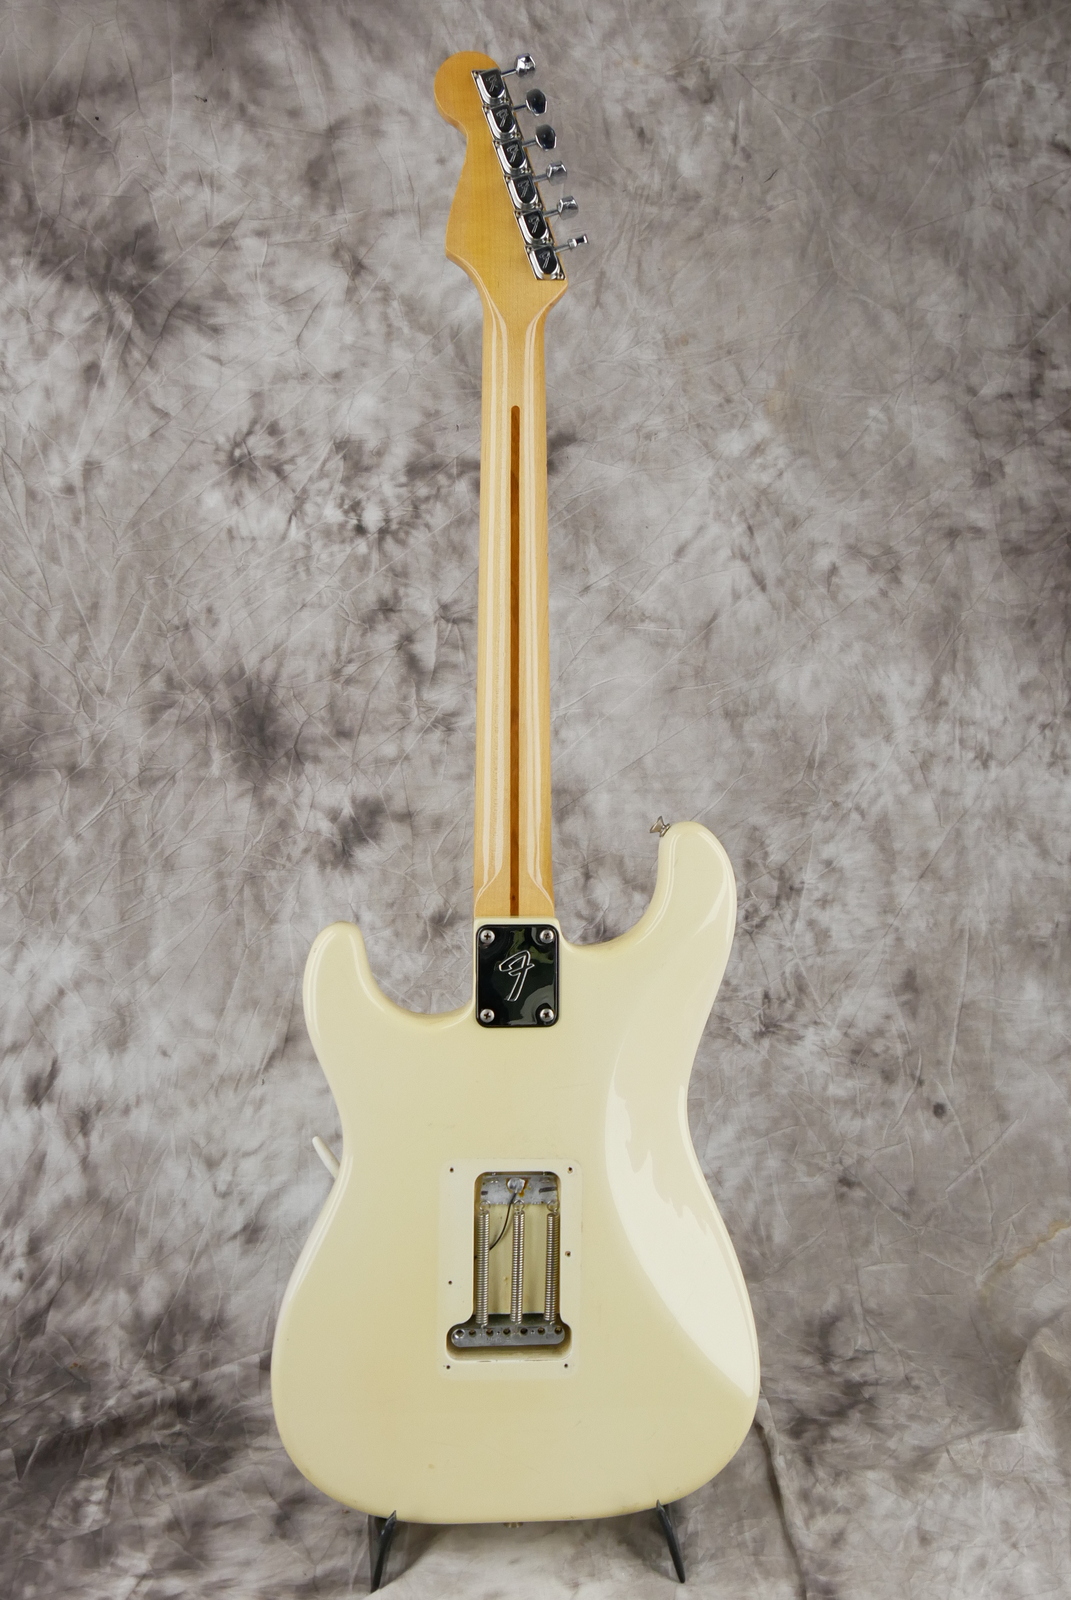 Fender_Stratocaster_Dan_smith_1982_tremolo_hardcase-002.JPG